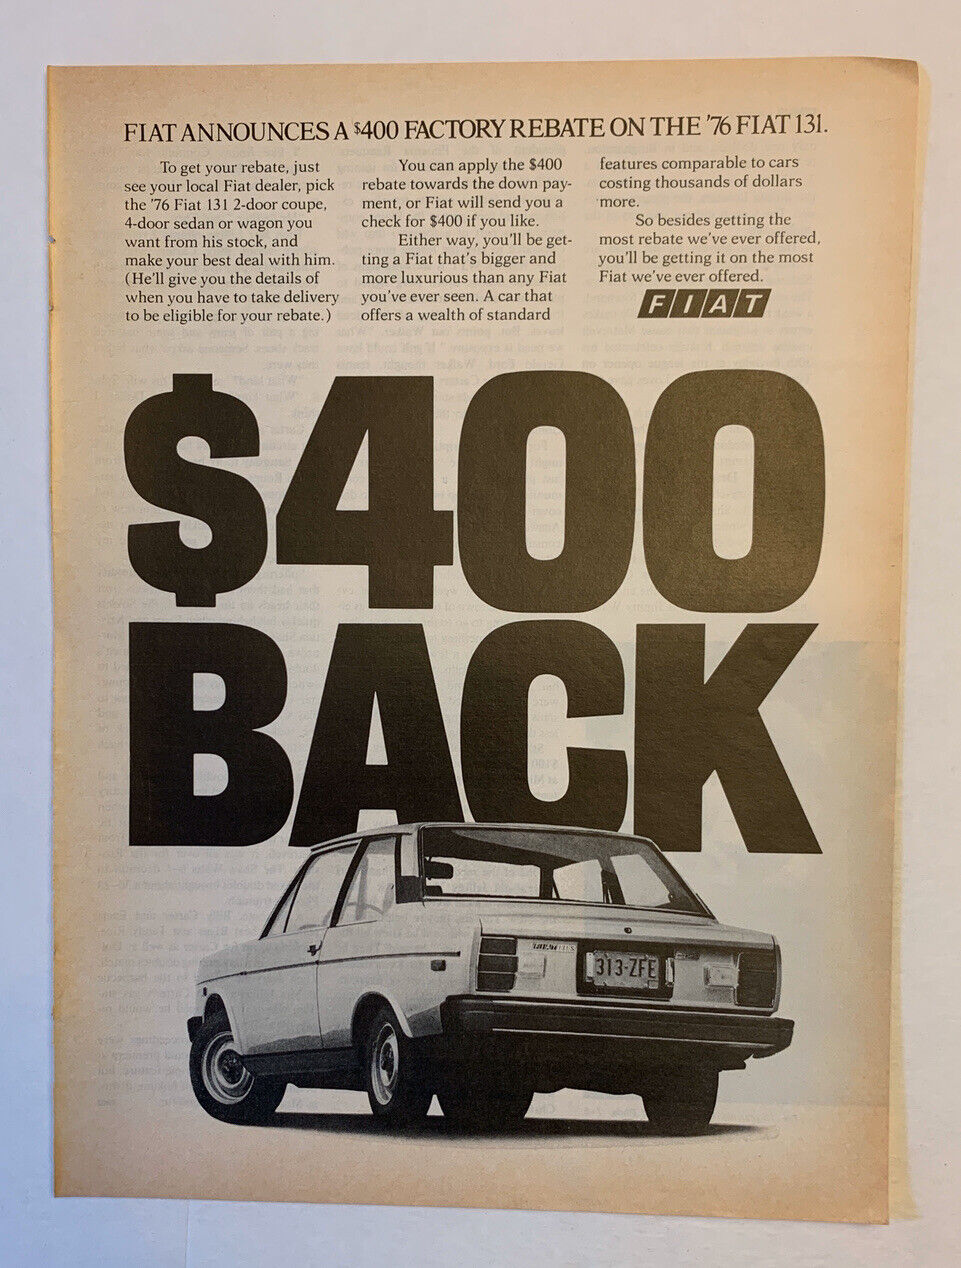 1976 Fiat 131 Print Ad Original Vintage $400 Back Rebate